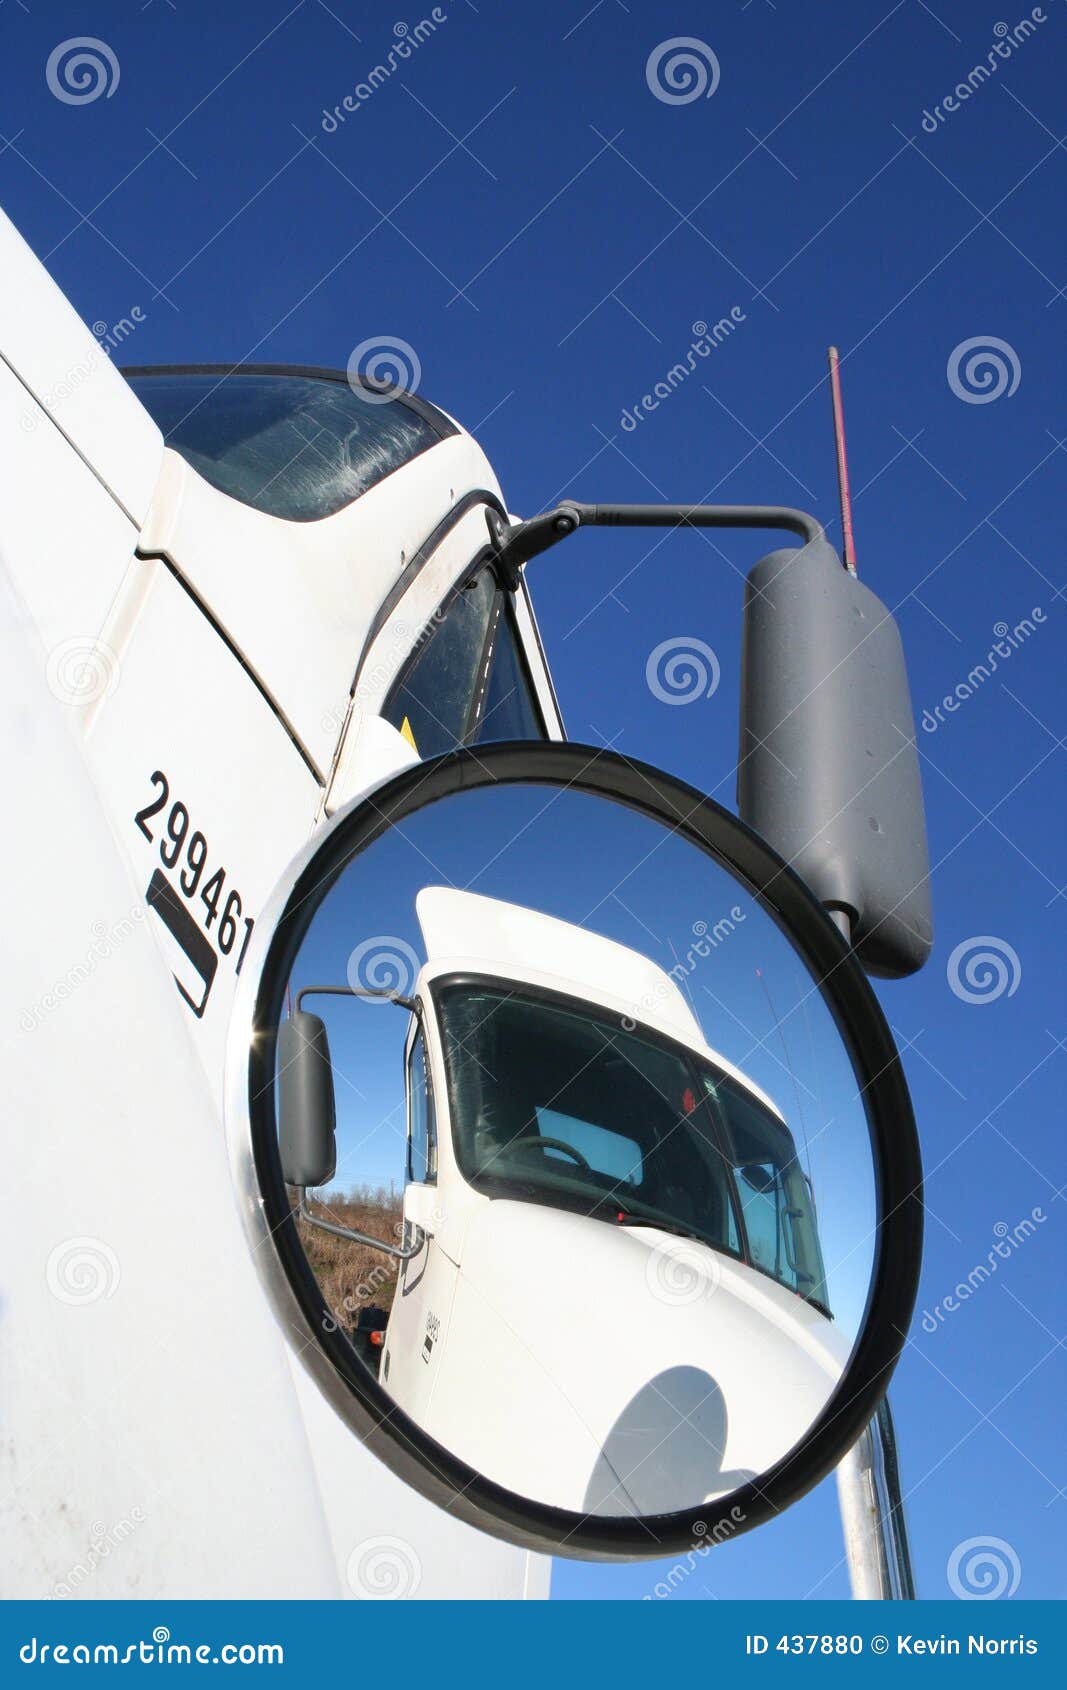 truck convex view